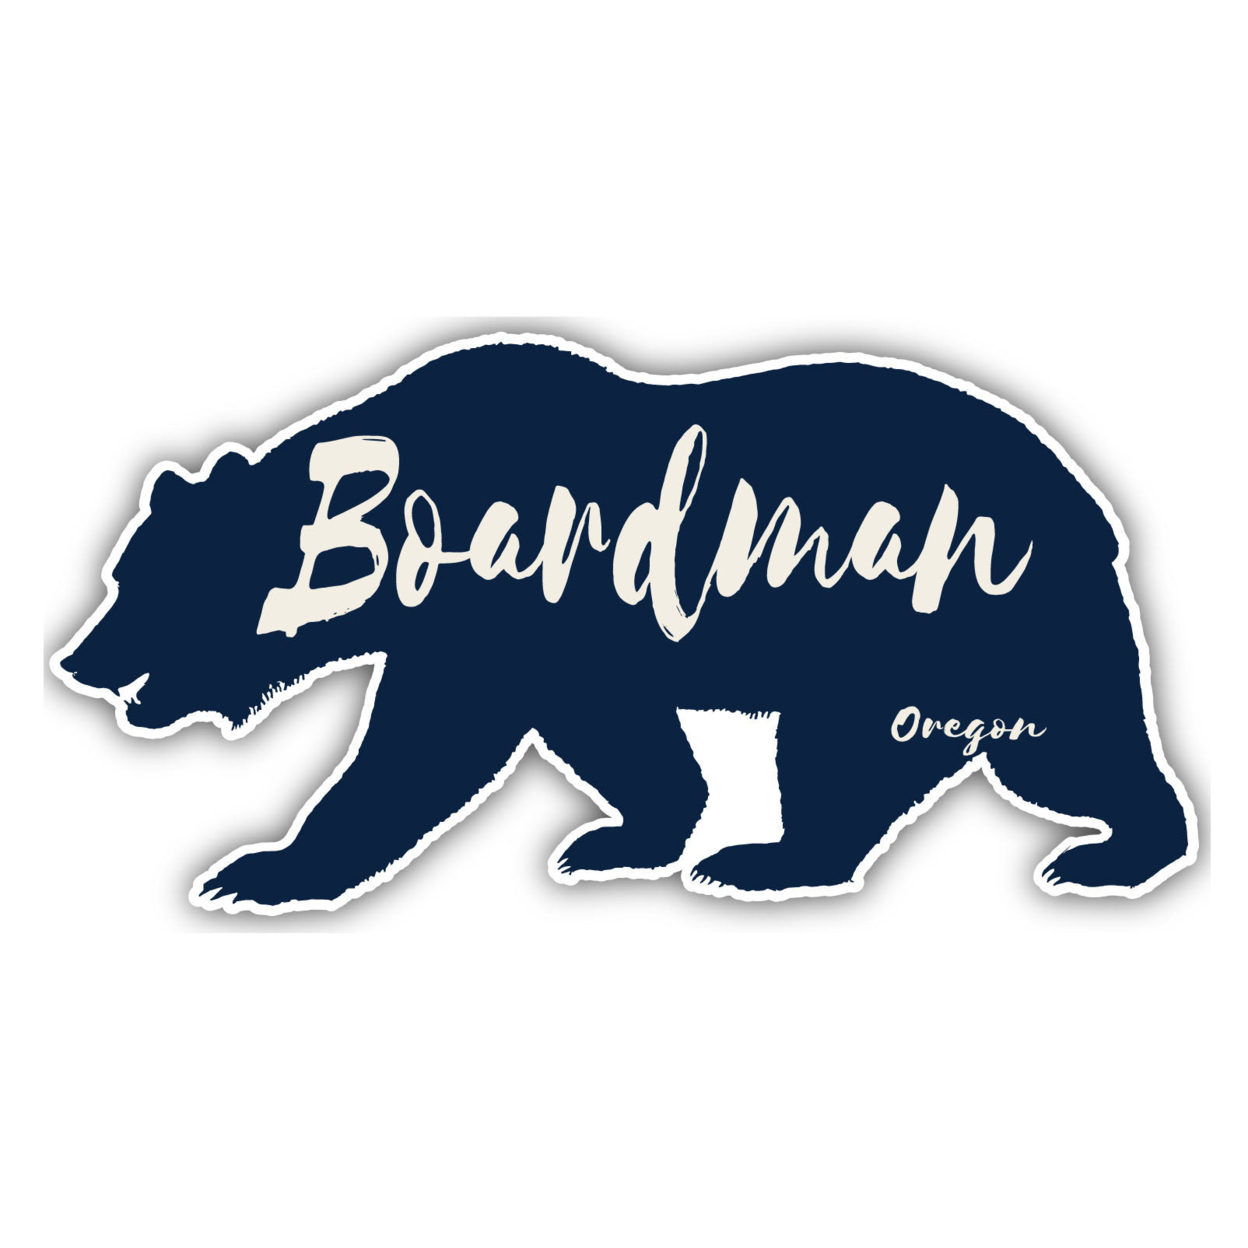 Boardman Oregon Souvenir Decorative Stickers (Choose Theme And Size) - 4-Pack, 8-Inch, Tent